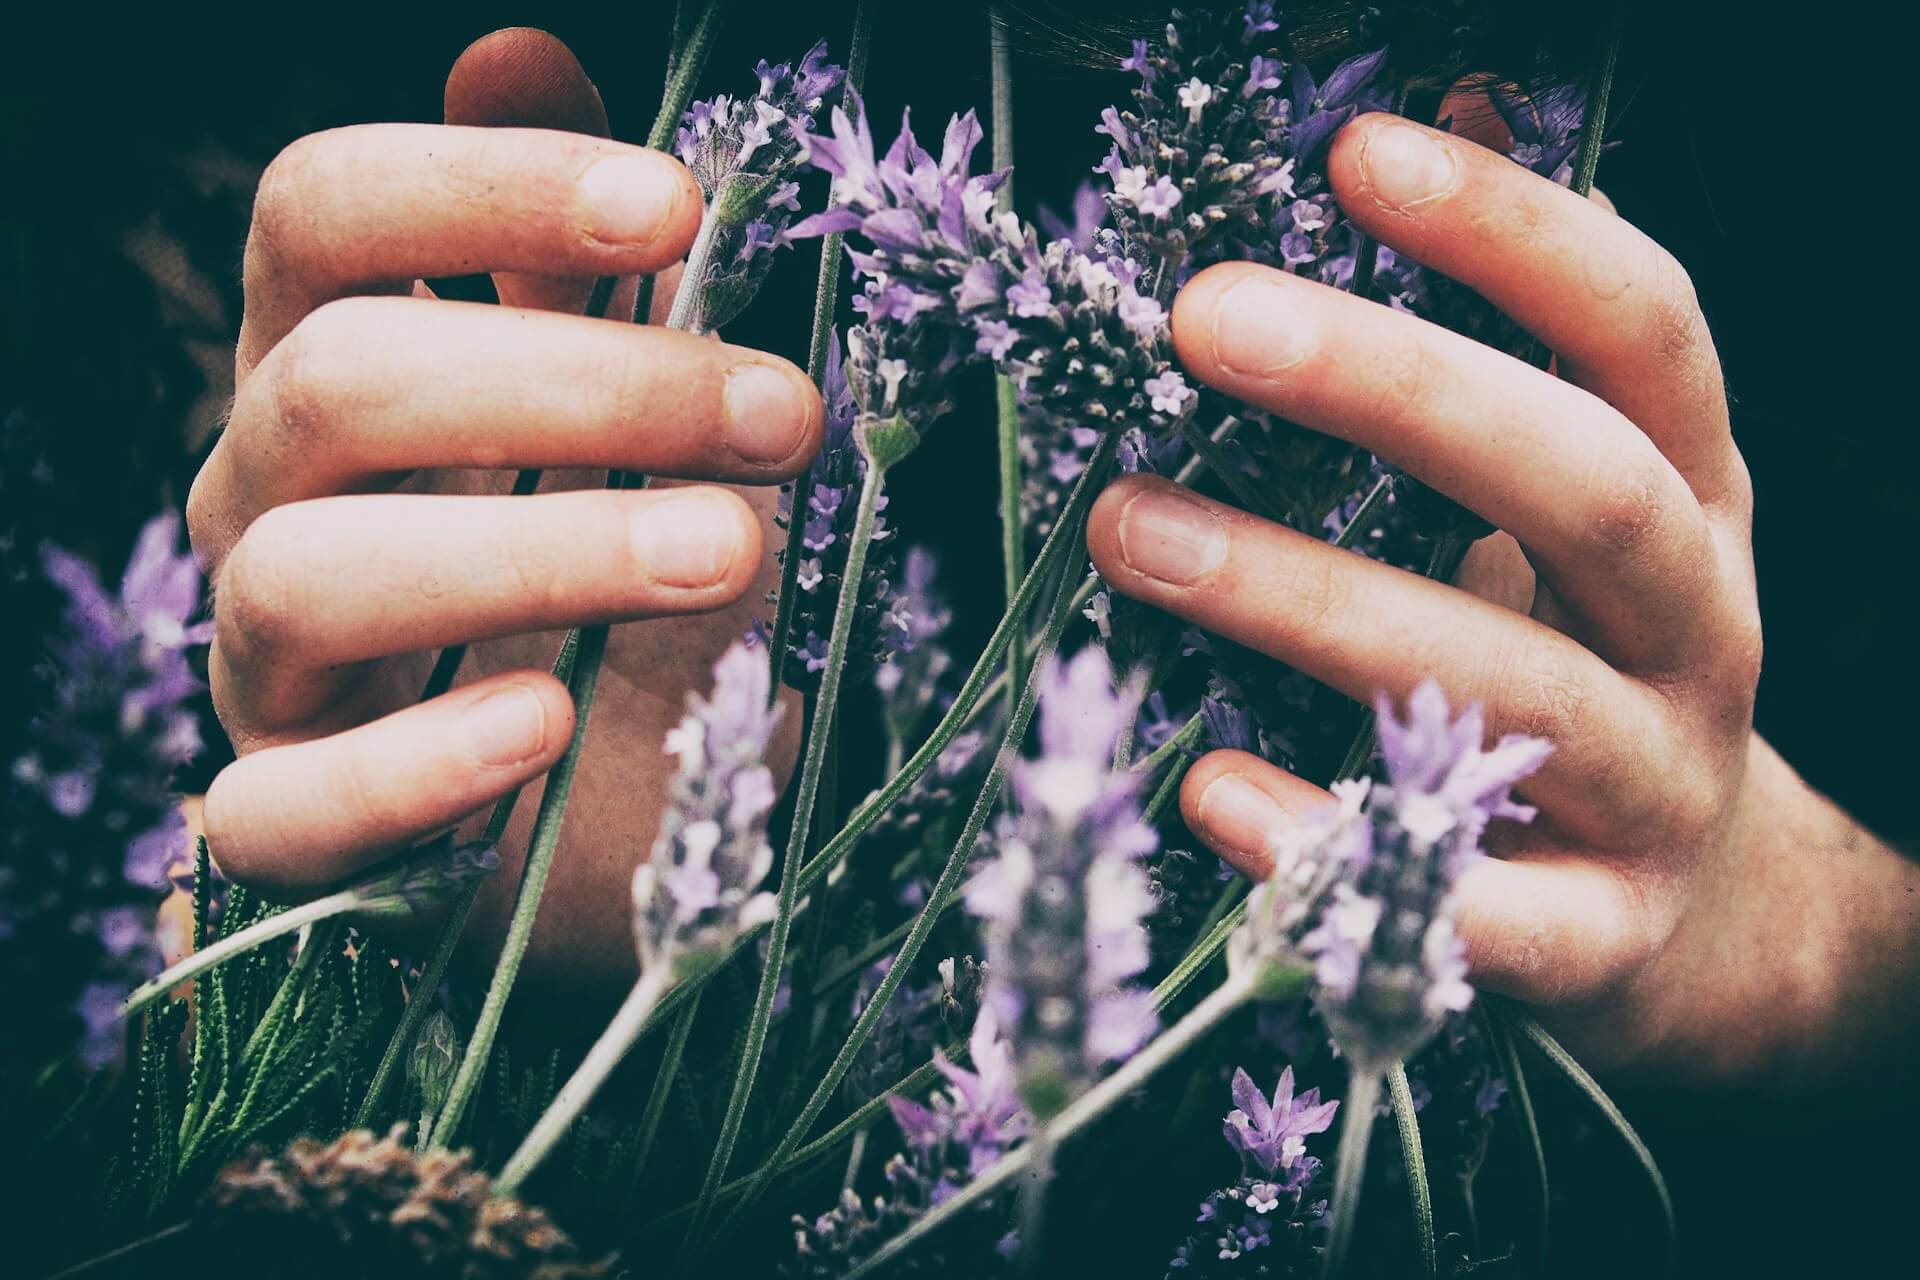 Lavender flowers used to make NamoMonk essential Oil